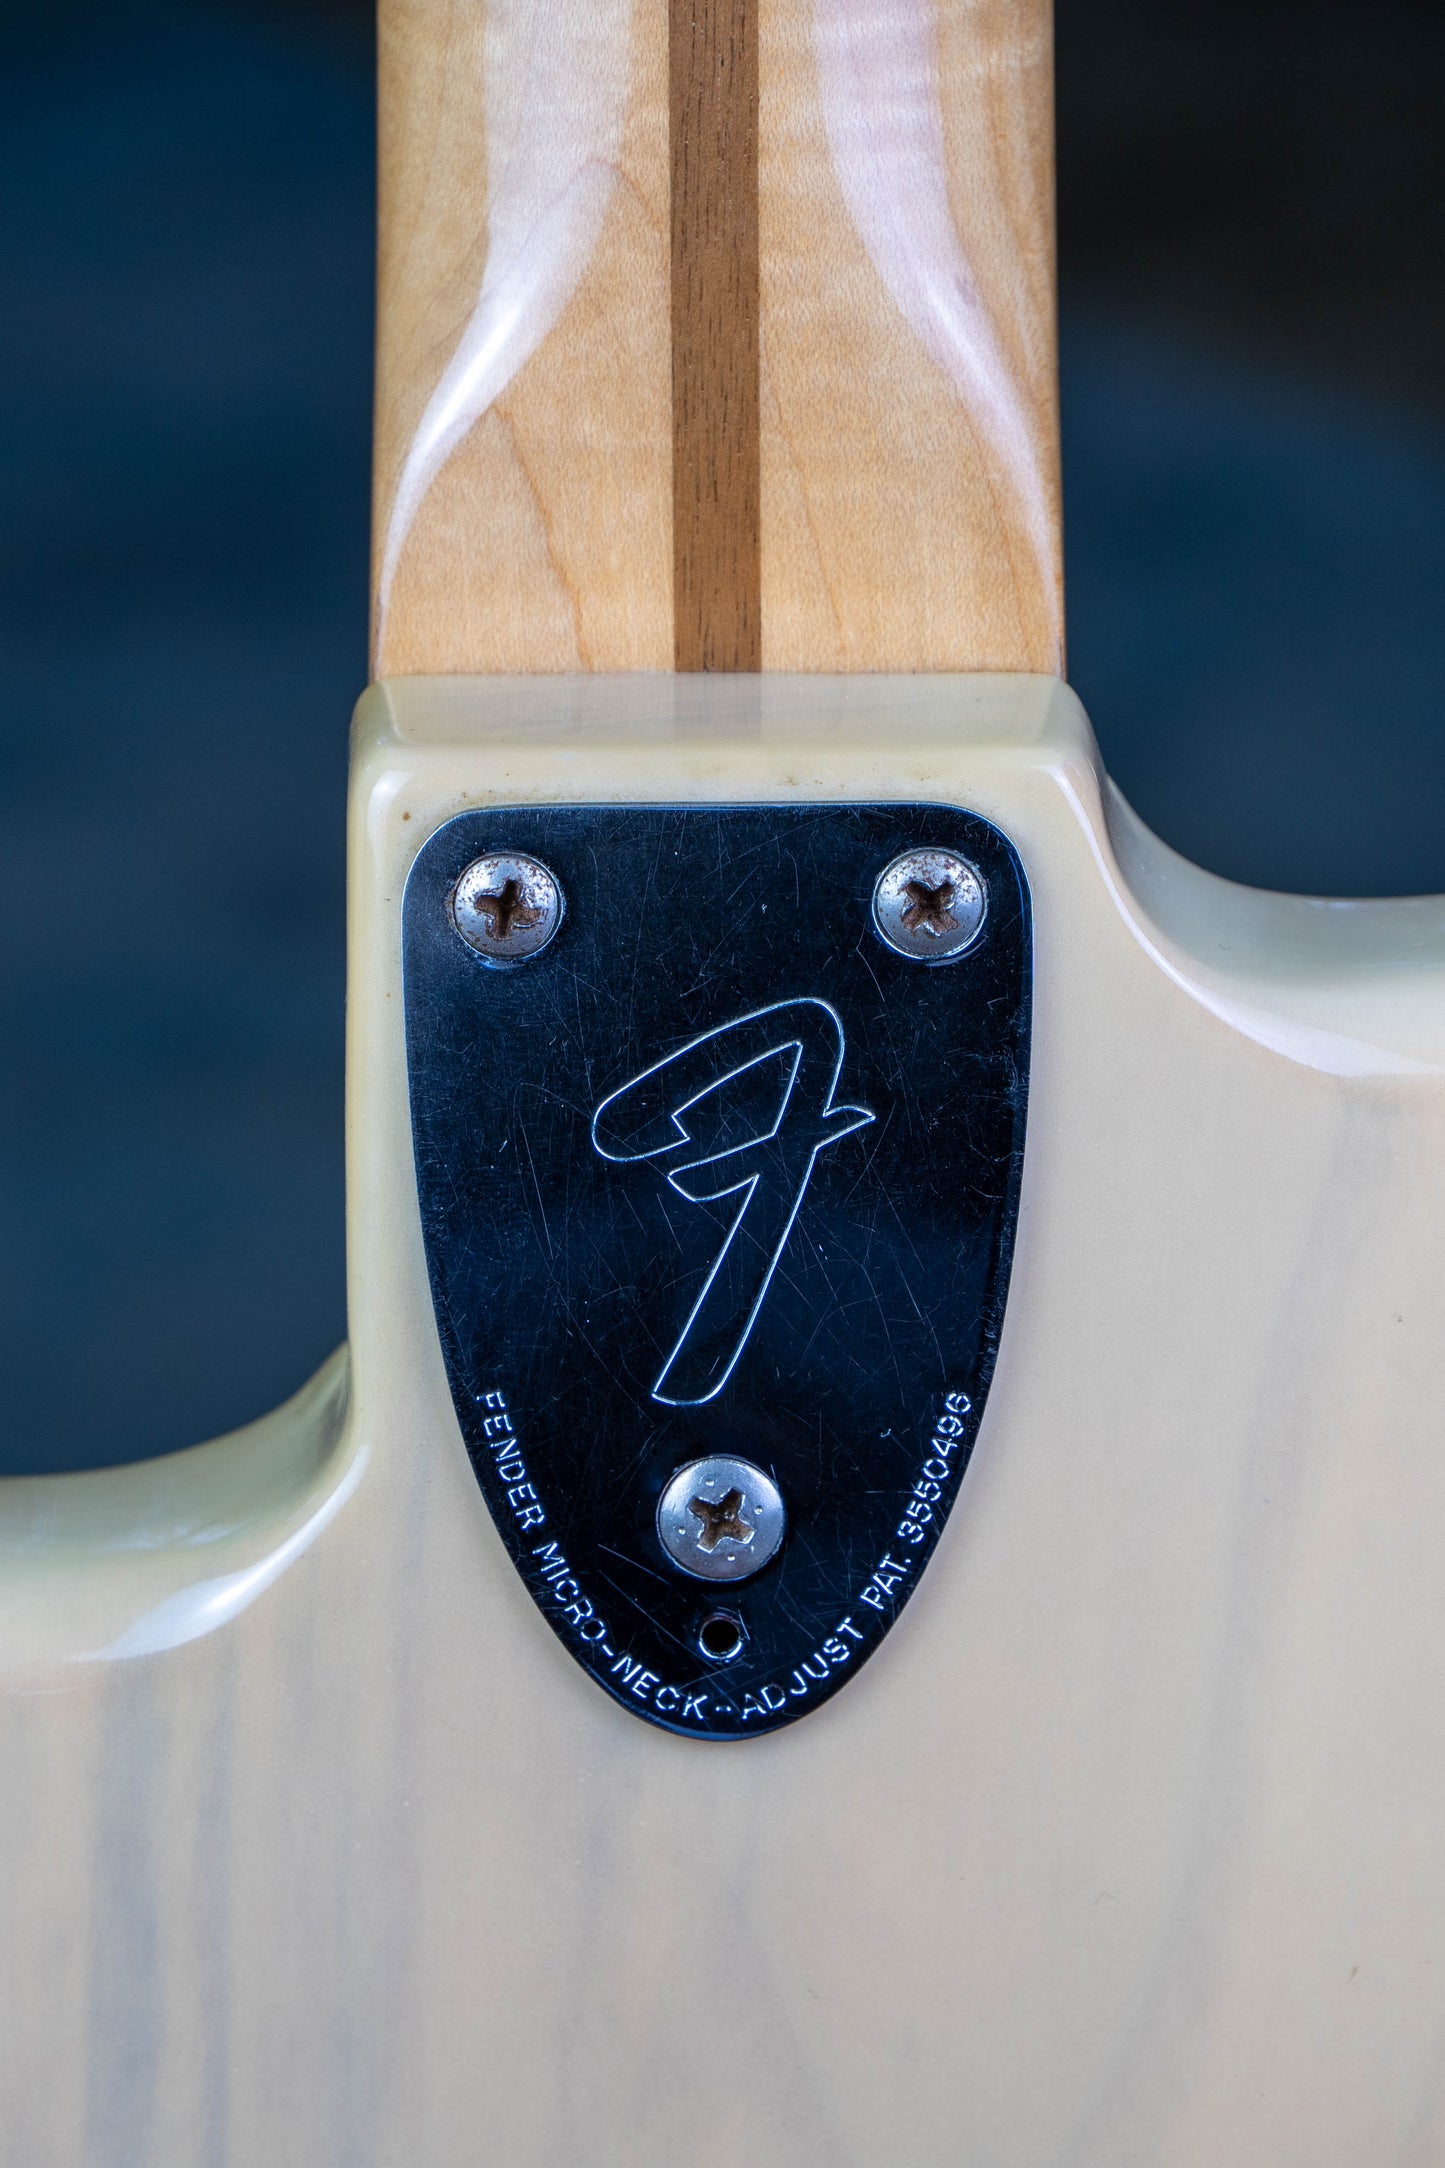 Fender Stratocaster See through blonde 1980